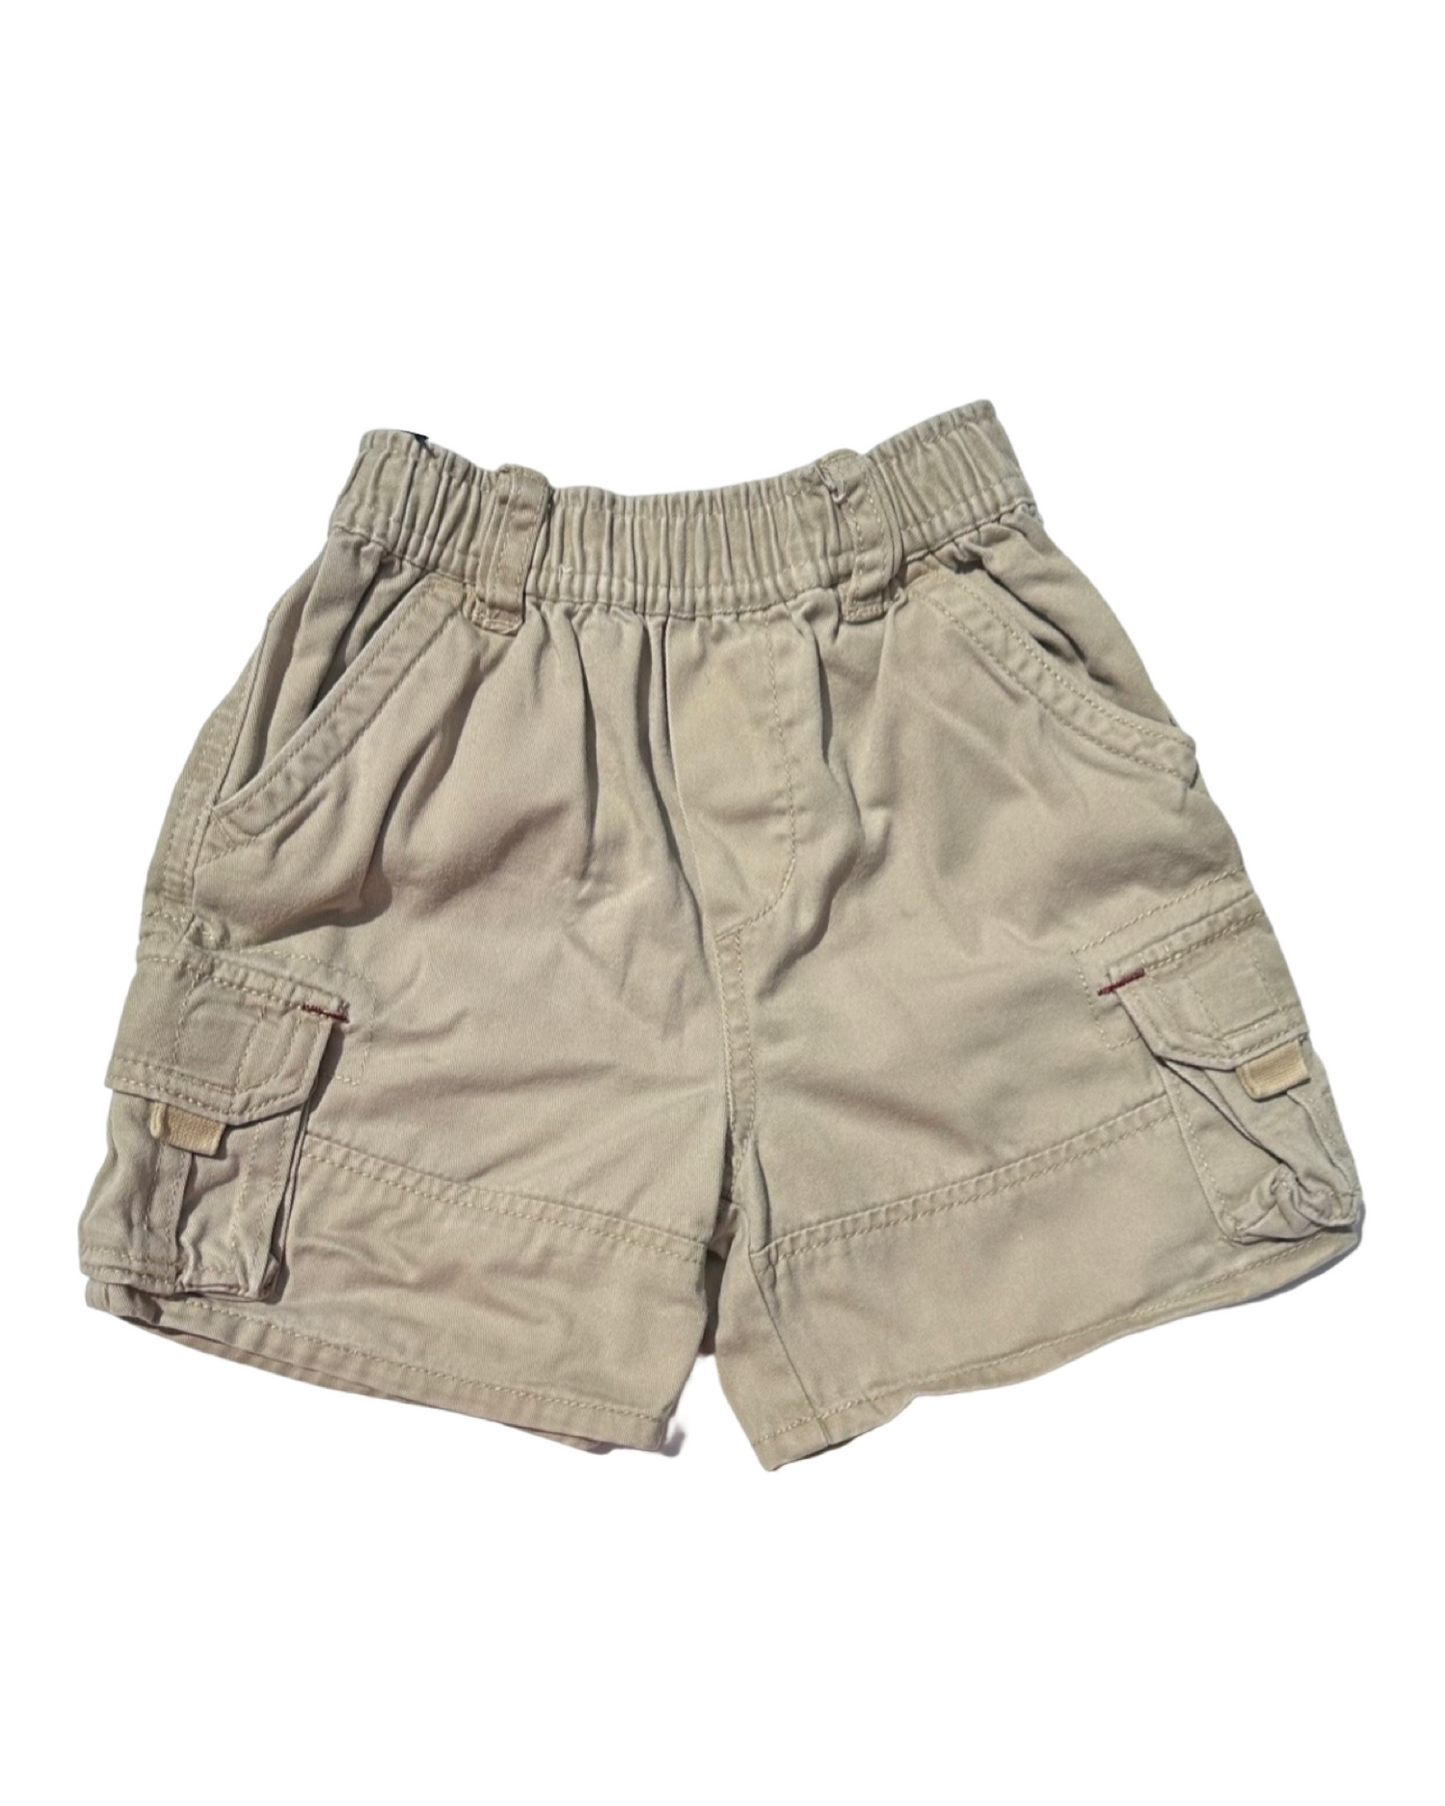 The Children's Place vintage beige cargo shorts (size 12-18mths)